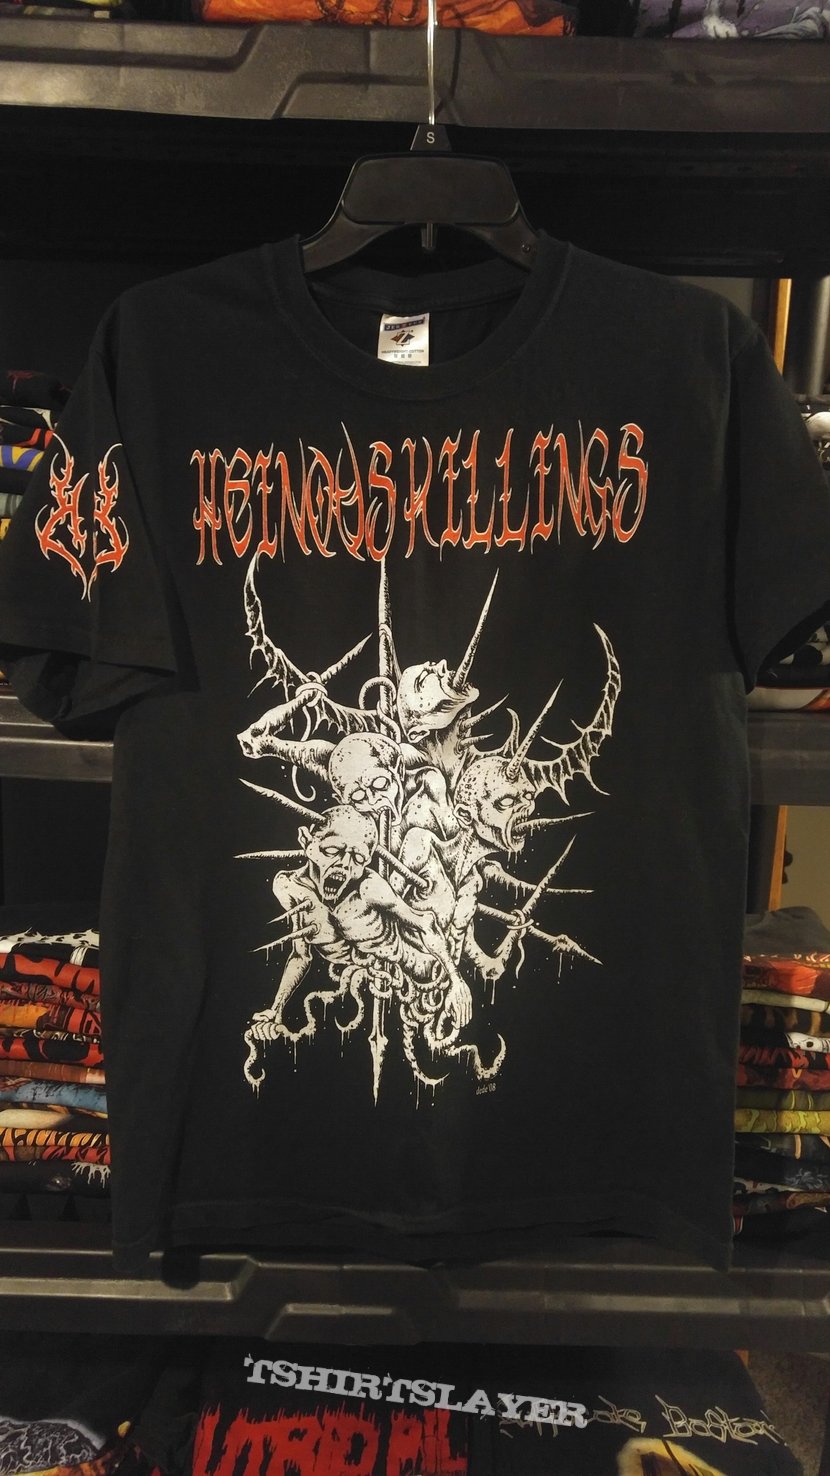 Heinous Killings t-shirt